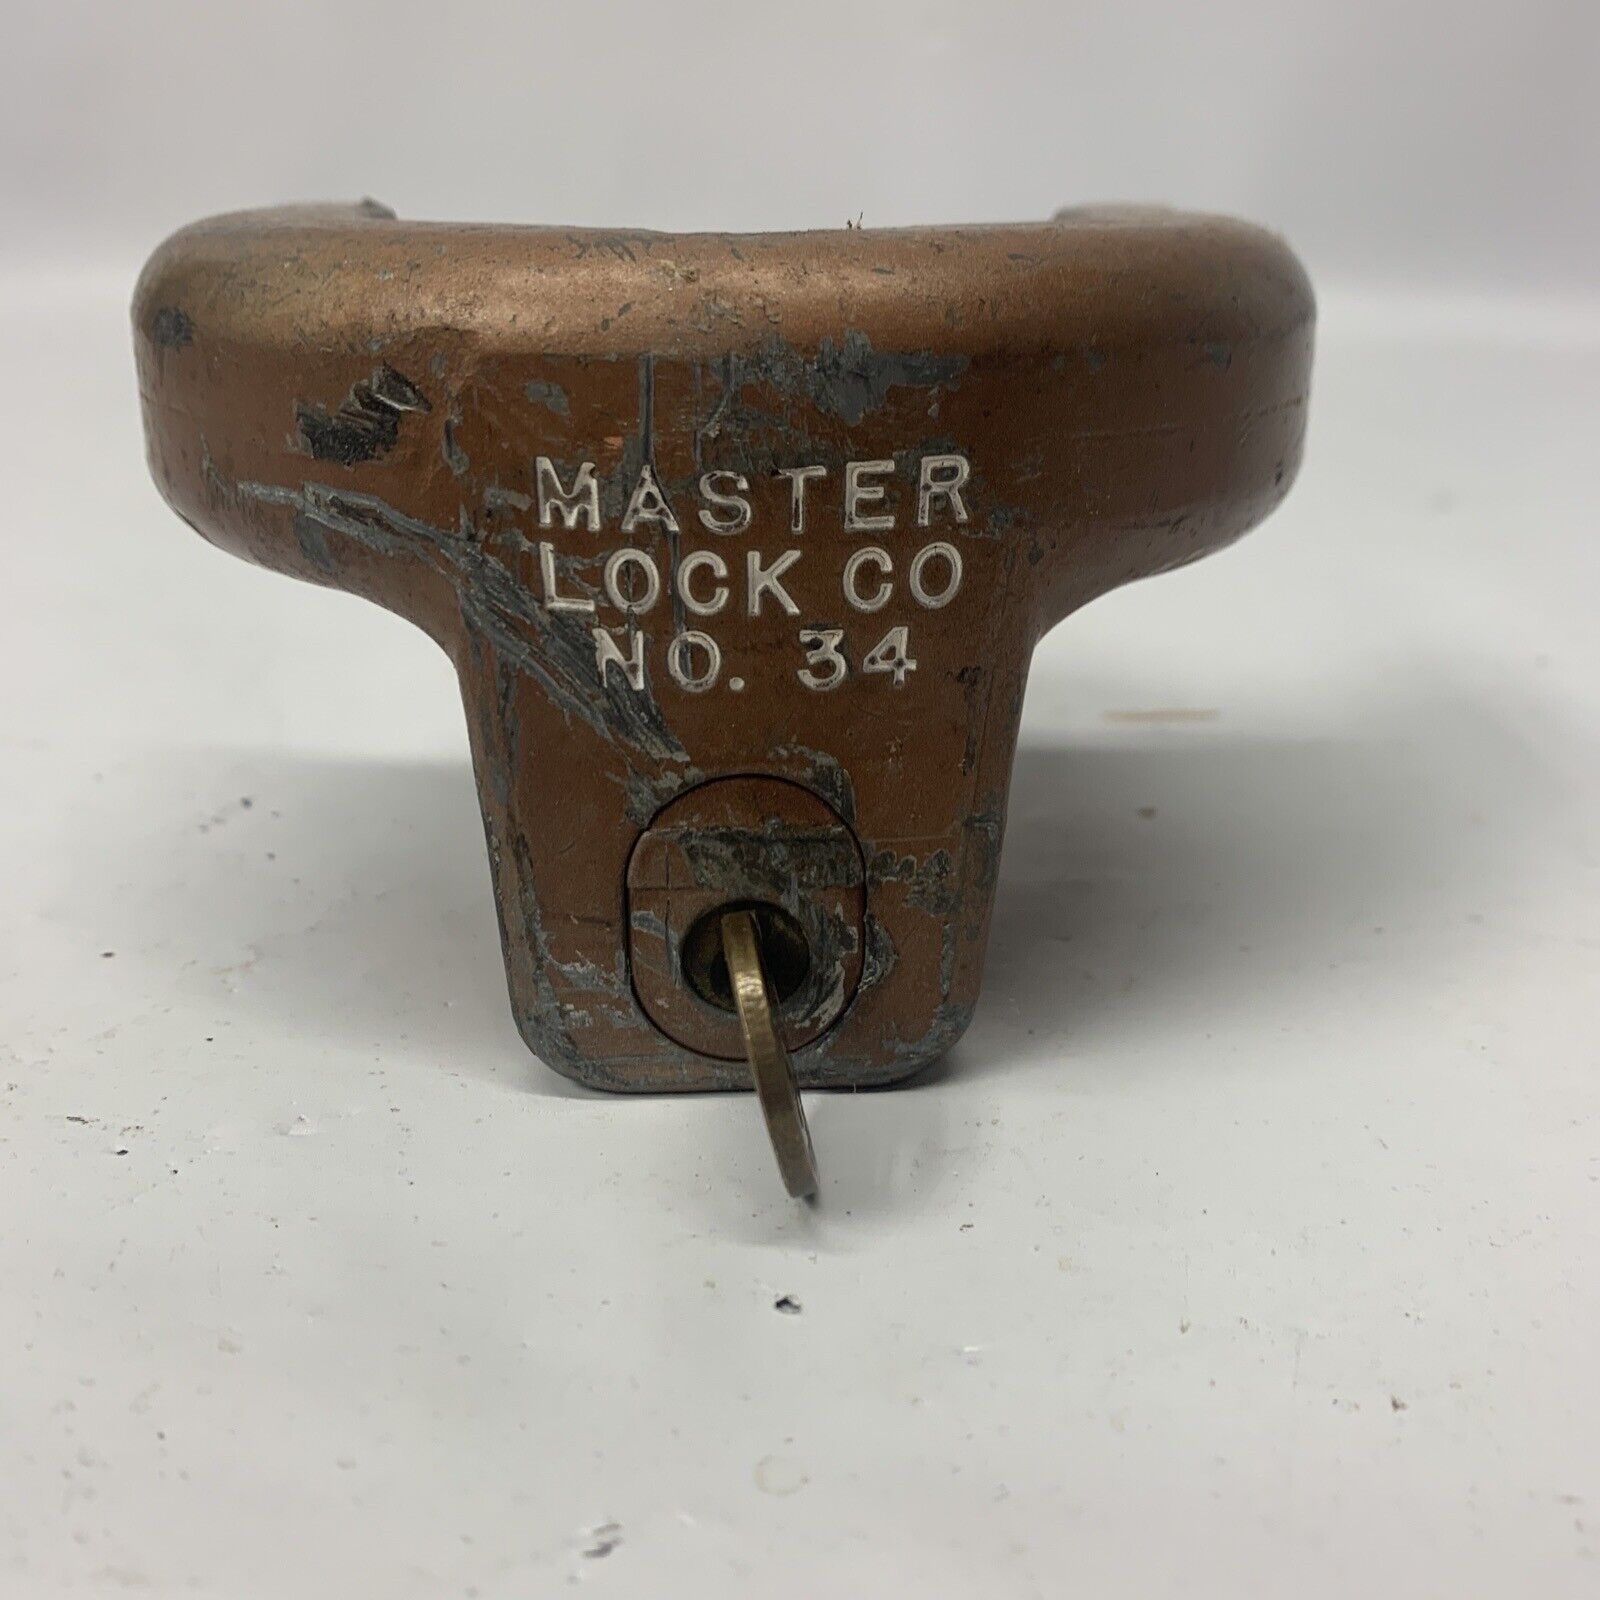 RARE Vintage Master Lock Co. No. 34 Trailer Hitch Lock